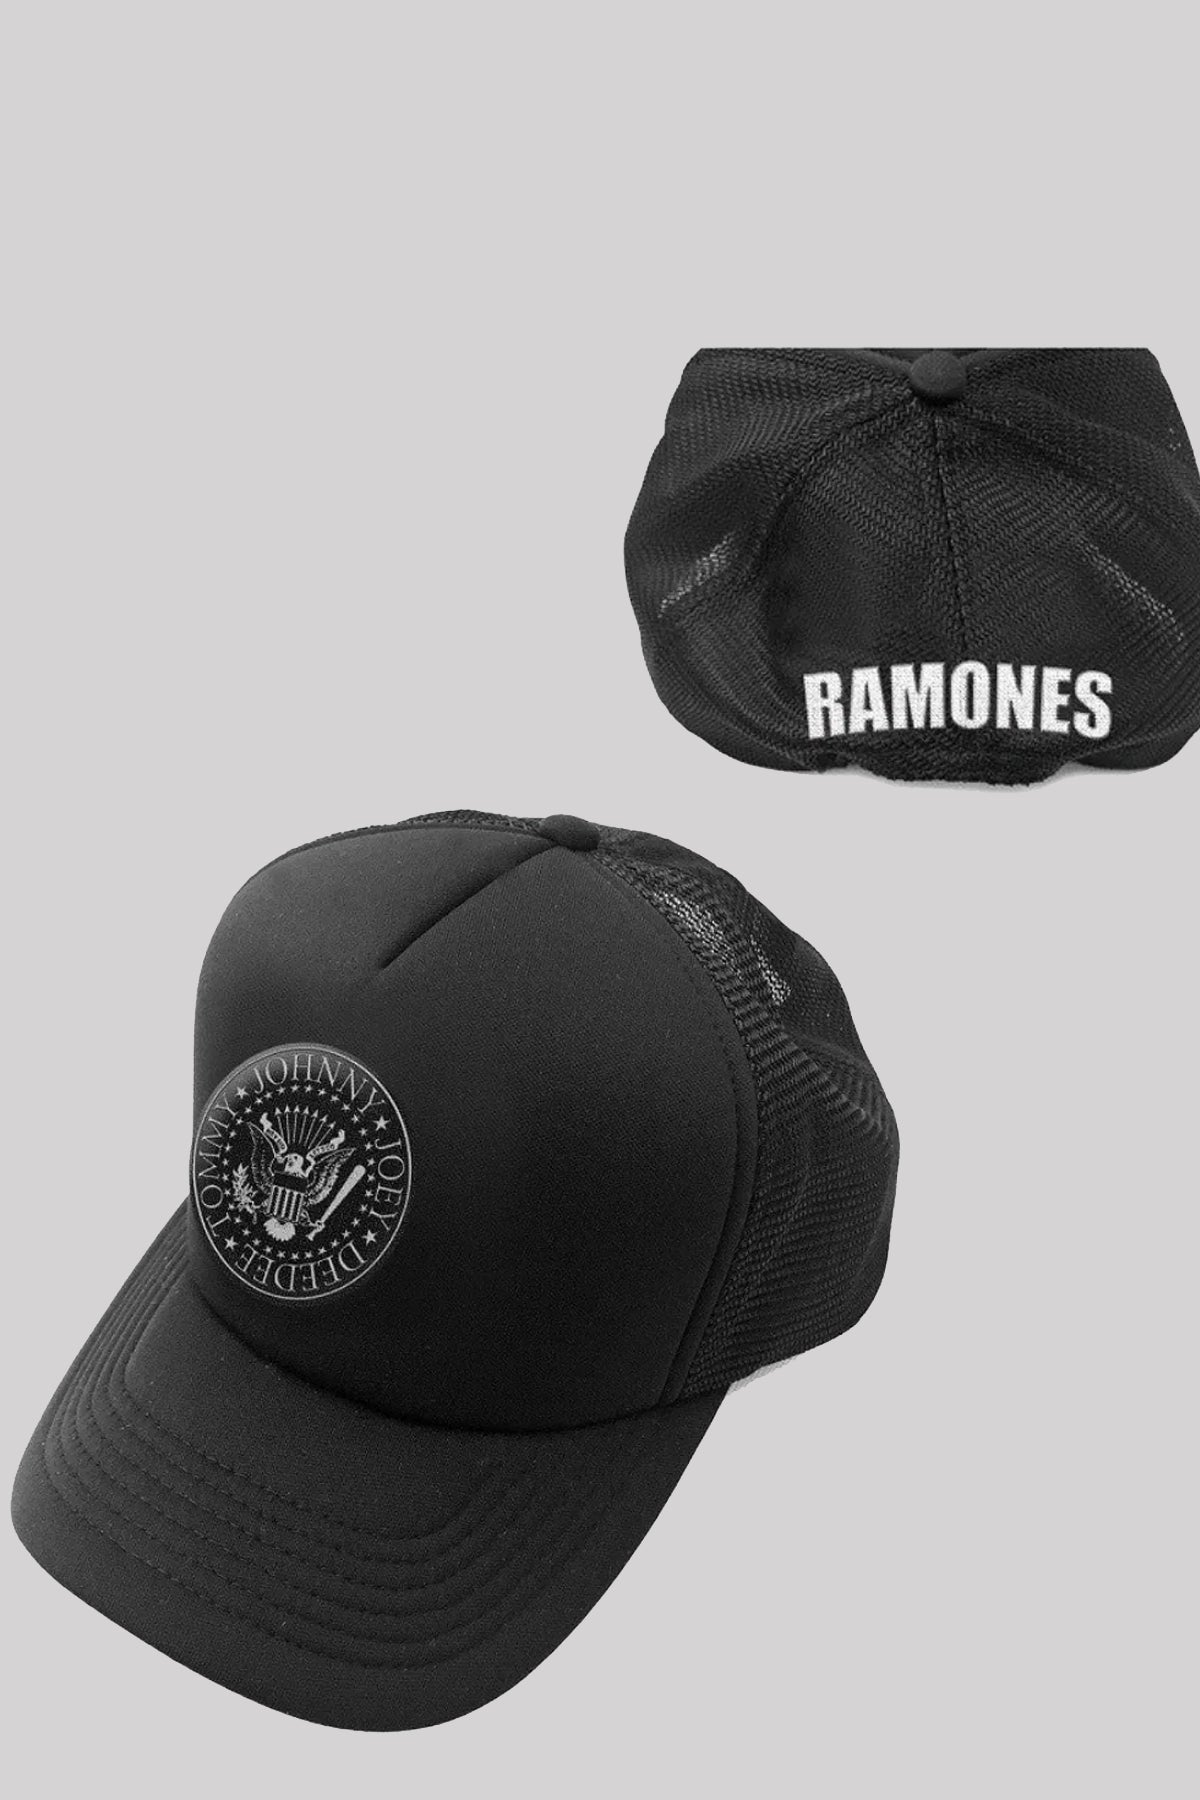 Ramones Unisex Mesh Back Cap: Presidential Seal